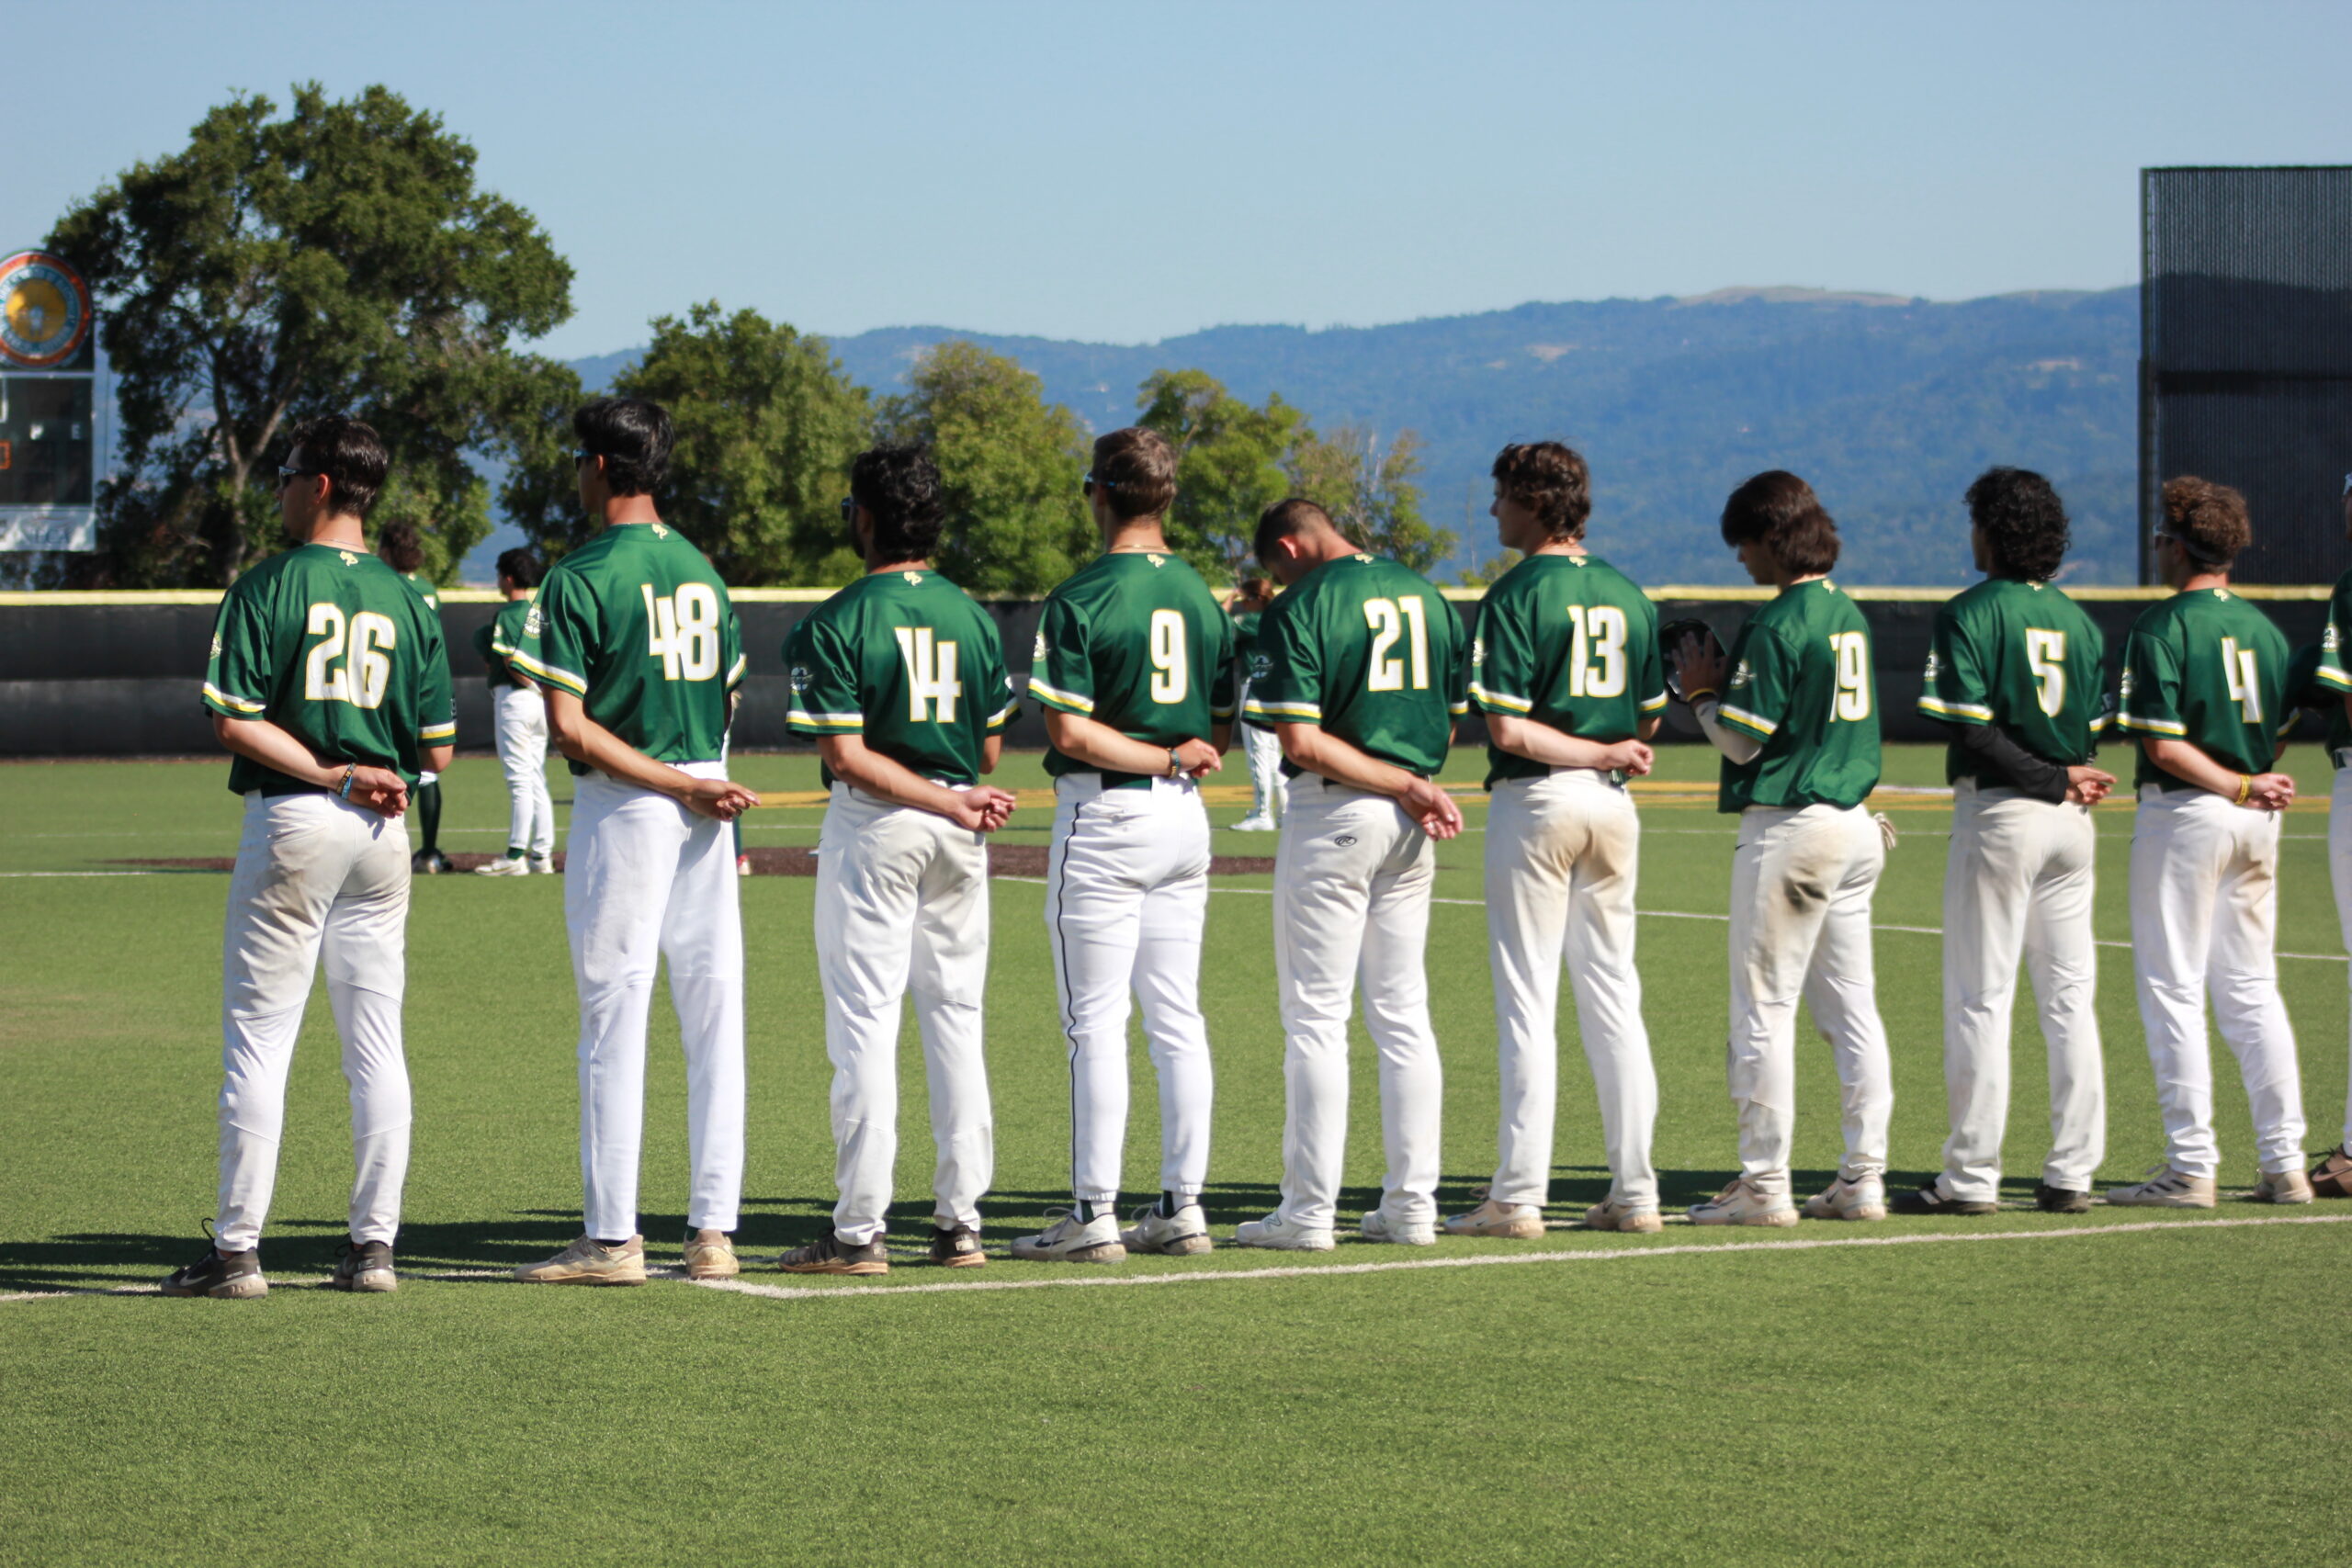 Legends Bay Area Baseball Camps - Official website for the Menlo Park  Legends Baseball team and Baseball Camps. The Total Baseball Experience